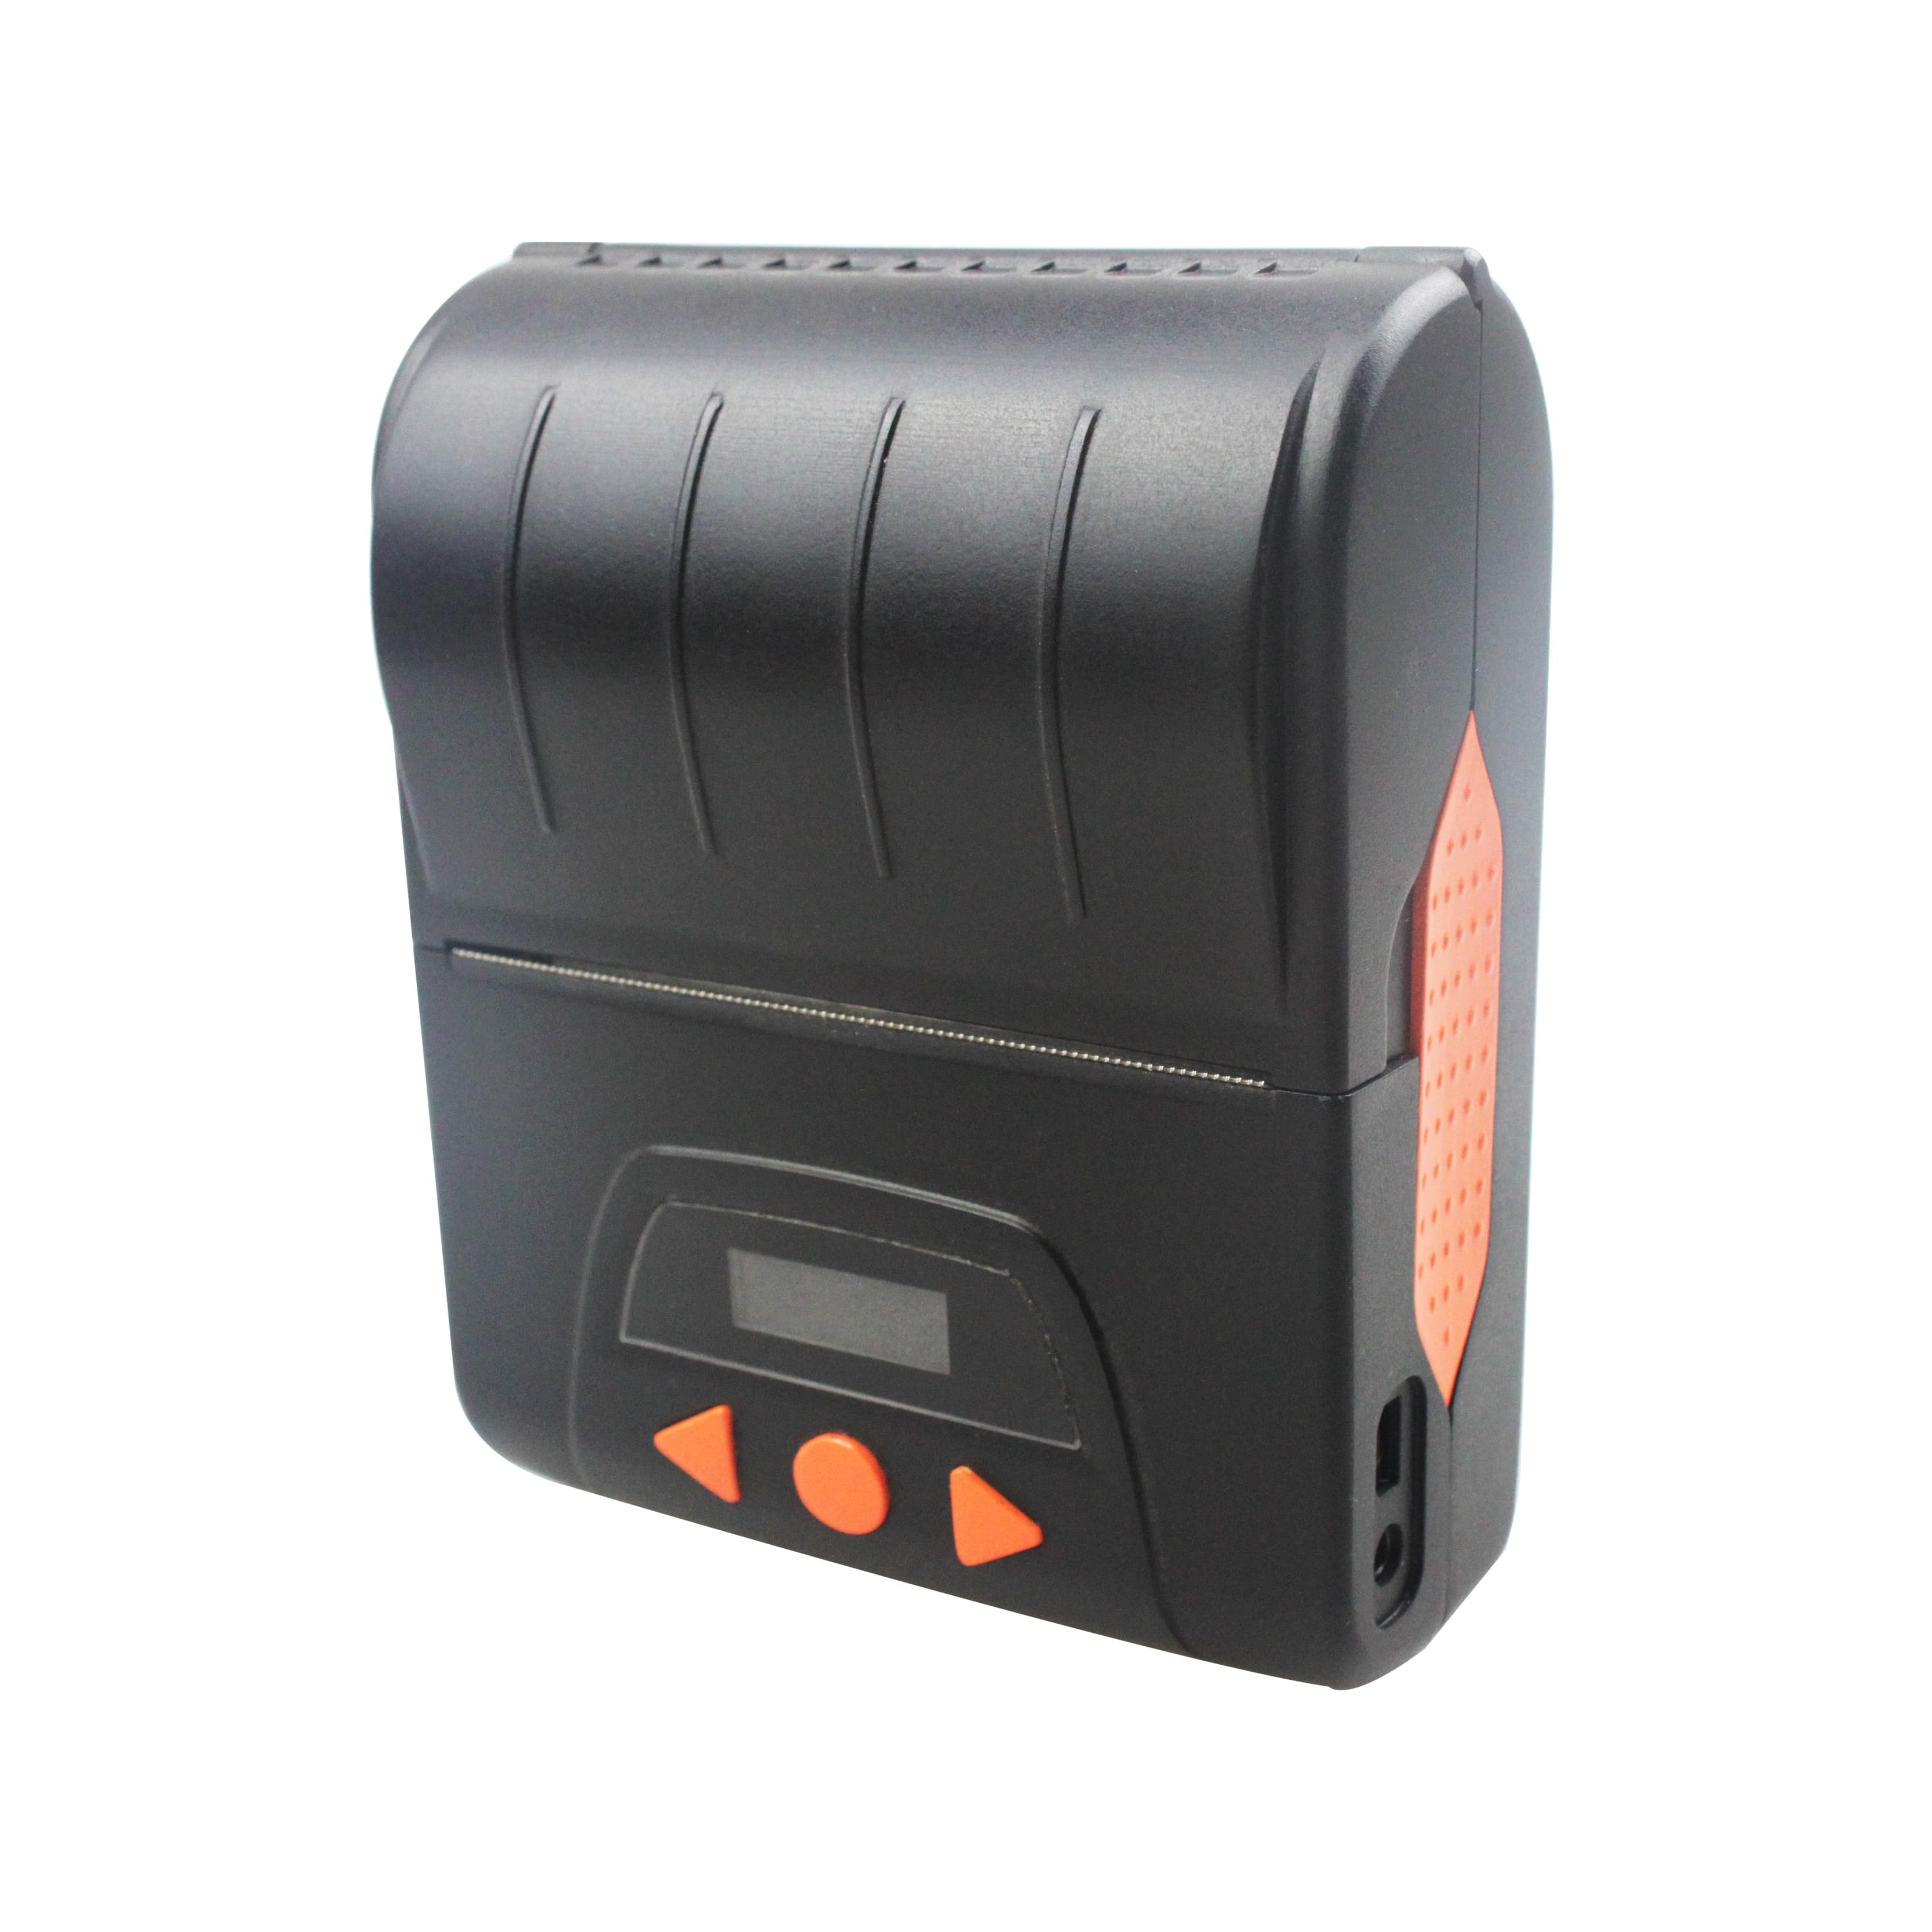 Cashino KMP-III 80mm bluetooth gratis SDK portátil mini impresora portátil de recibos
